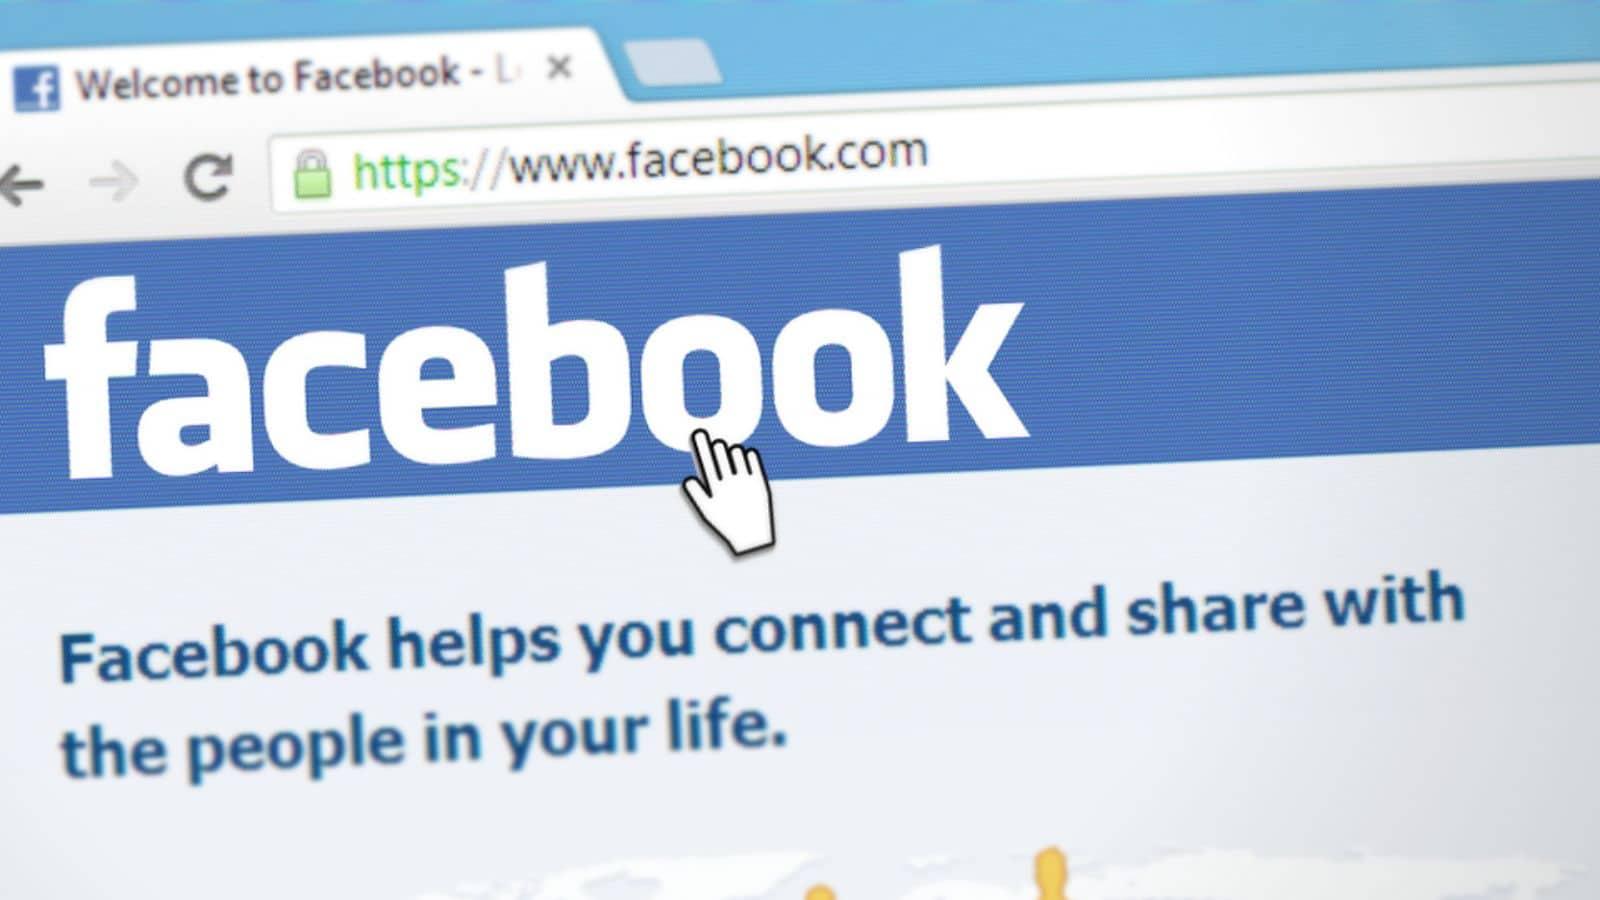 FB Login, Facebook Login, How to Sign In to Facebook.com in 2023